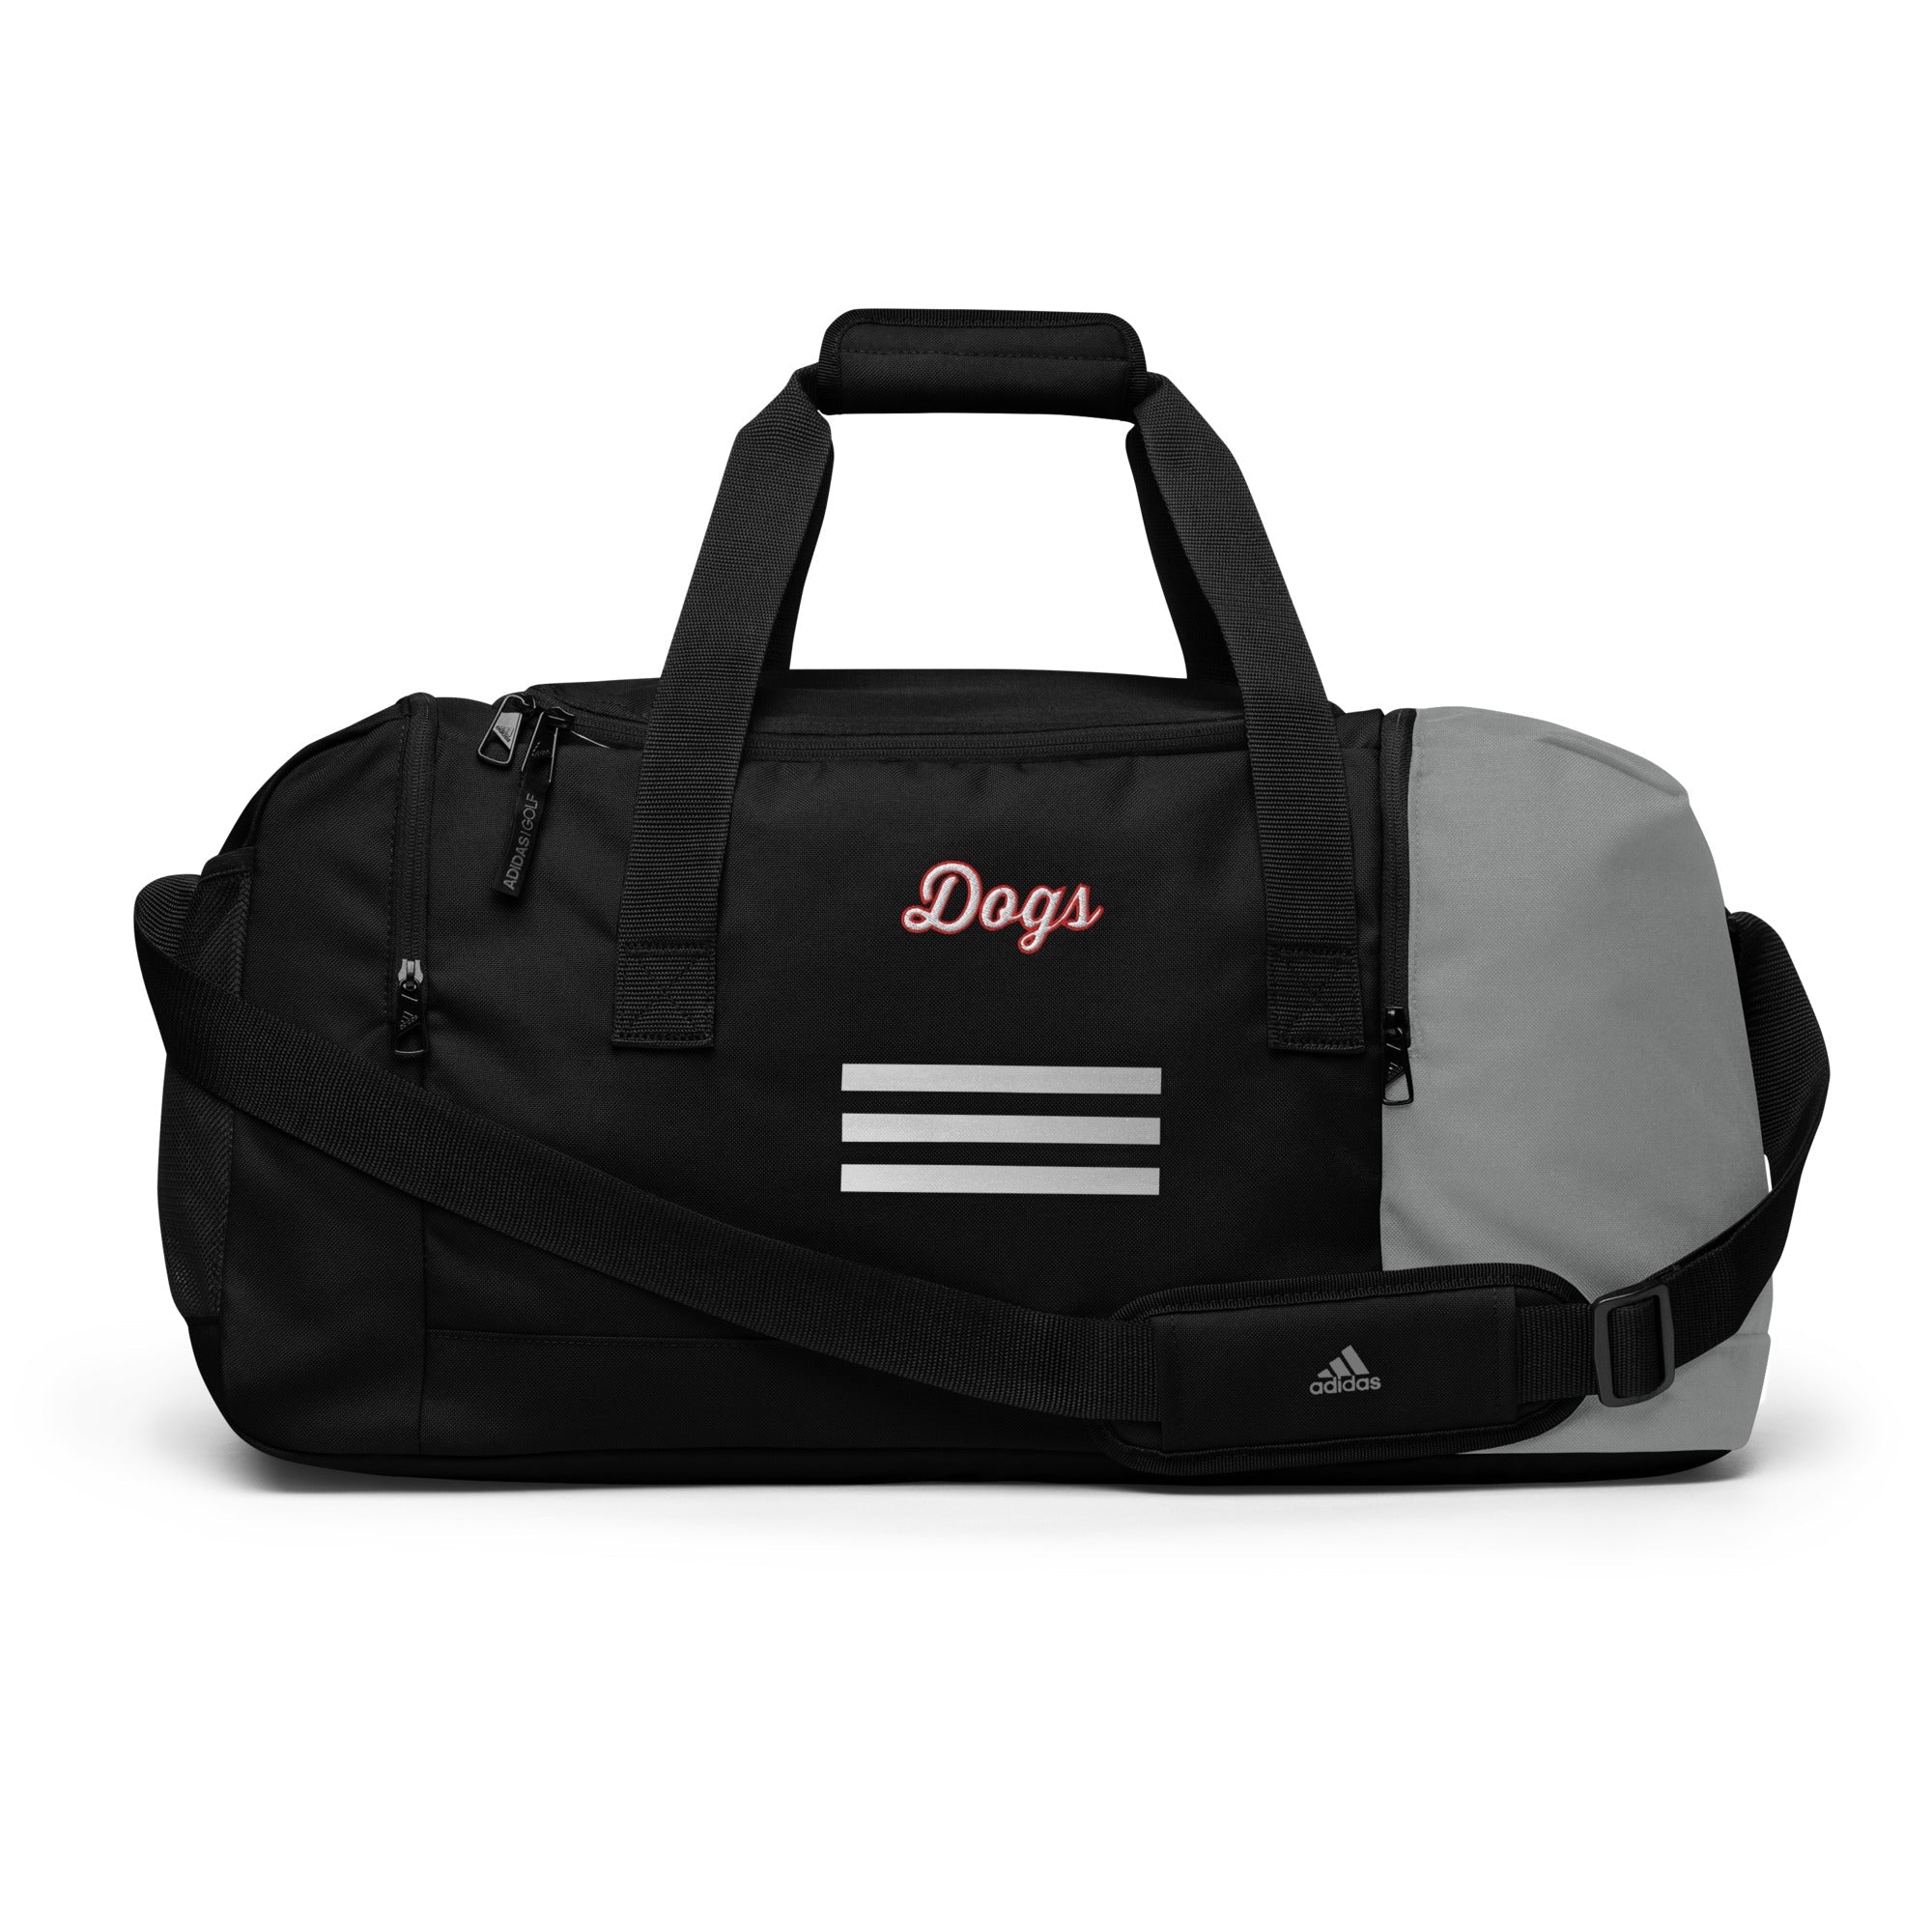 MD Dogs adidas duffle bag